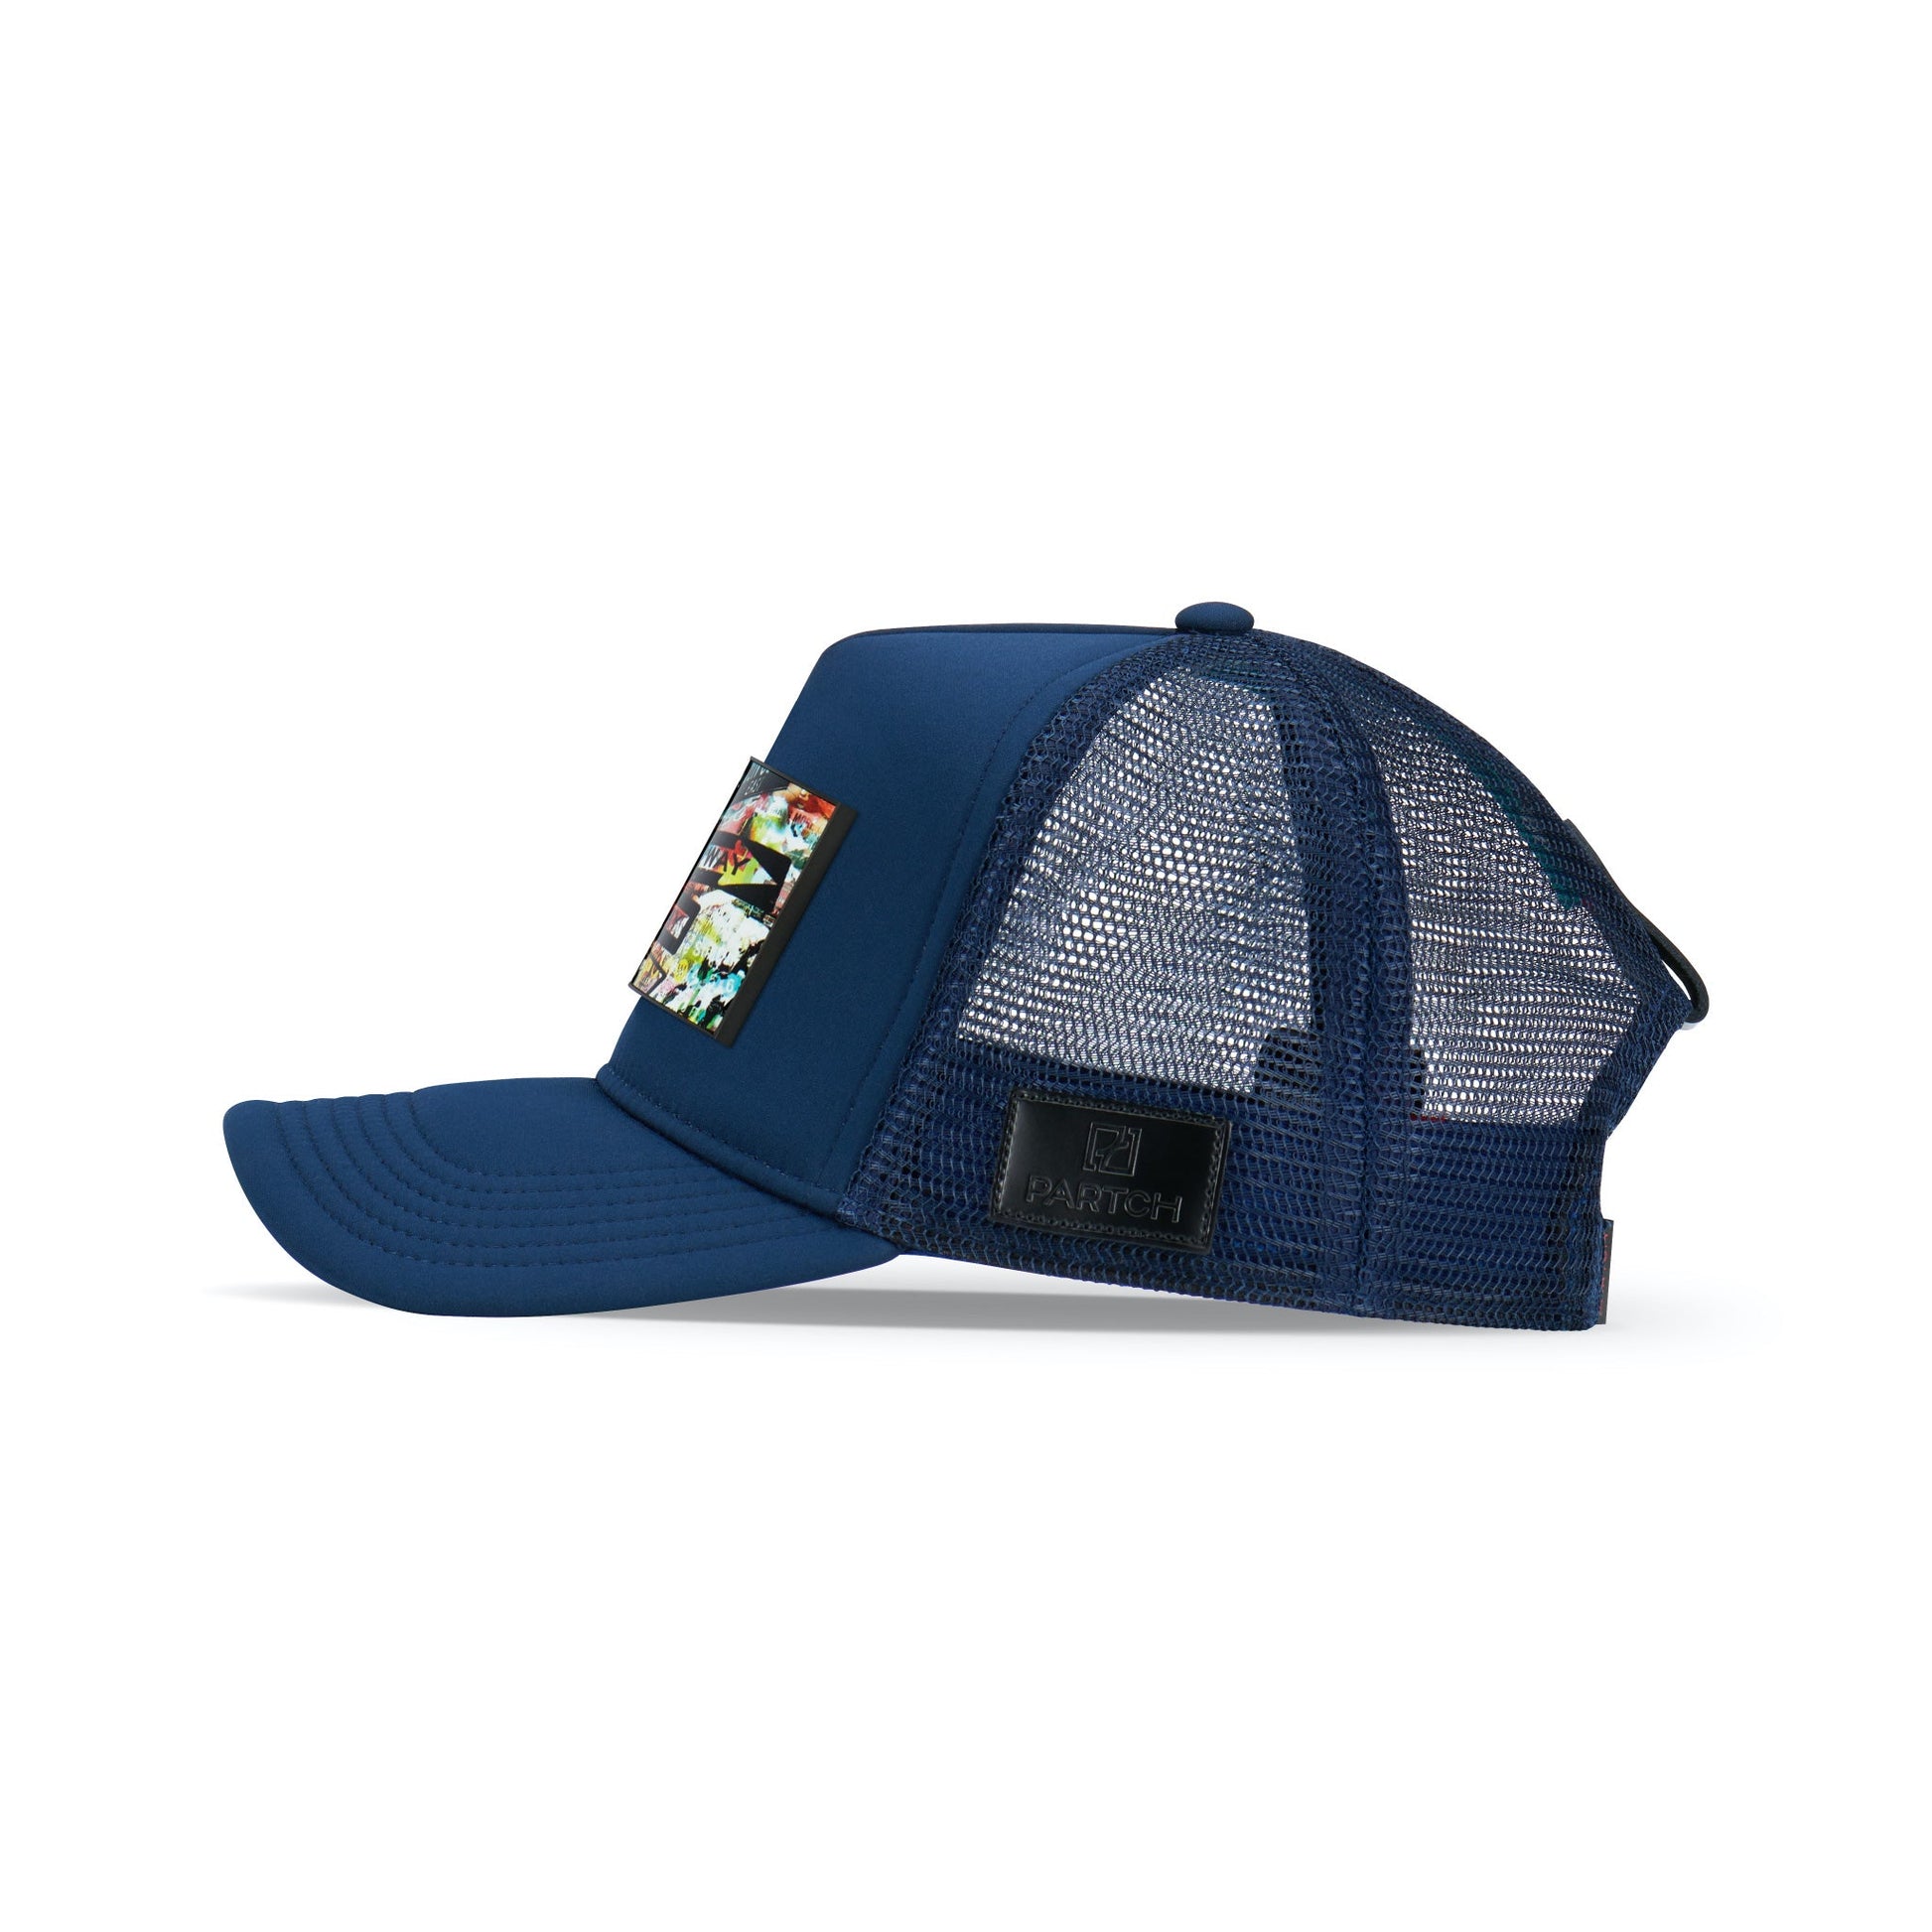 Partch Trucker Hat Navy Blue with PARTCH-Clip Unixvi Side View